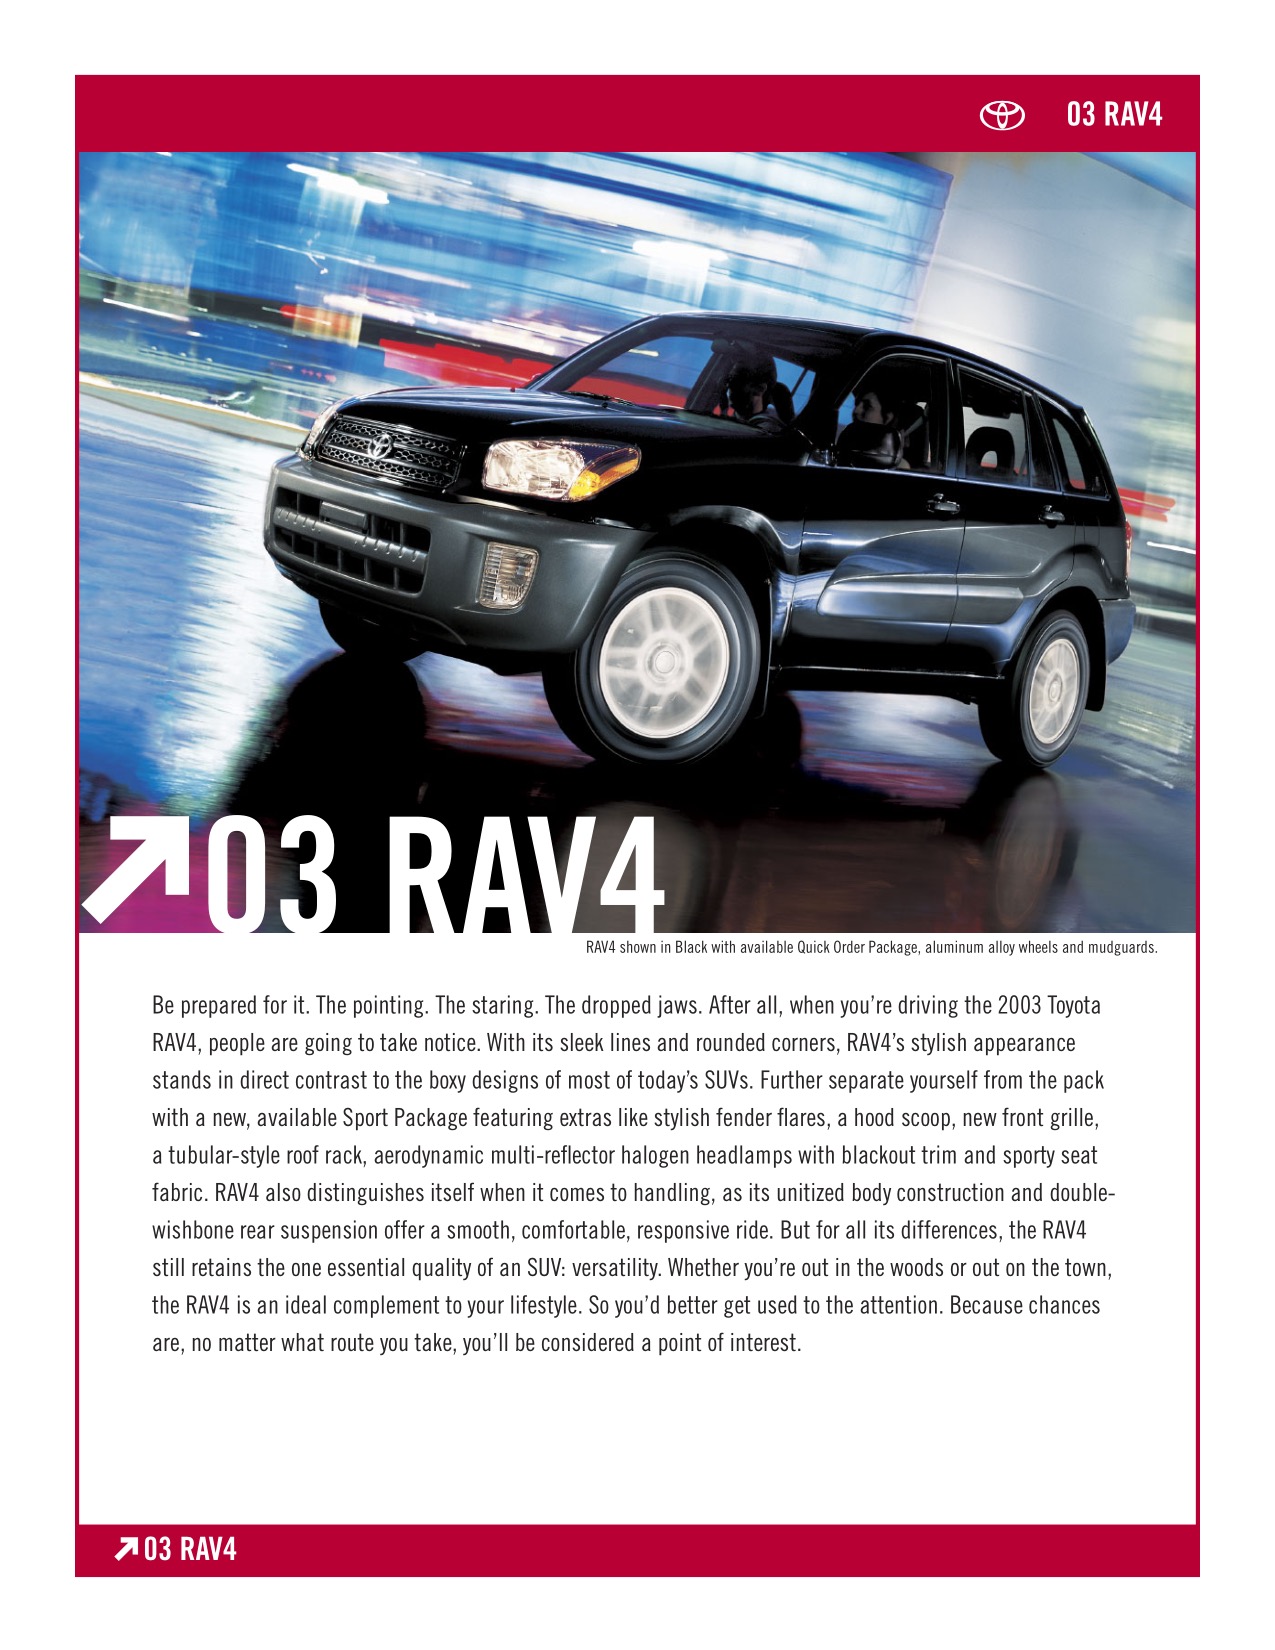 2003 Toyota RAV4 Brochure